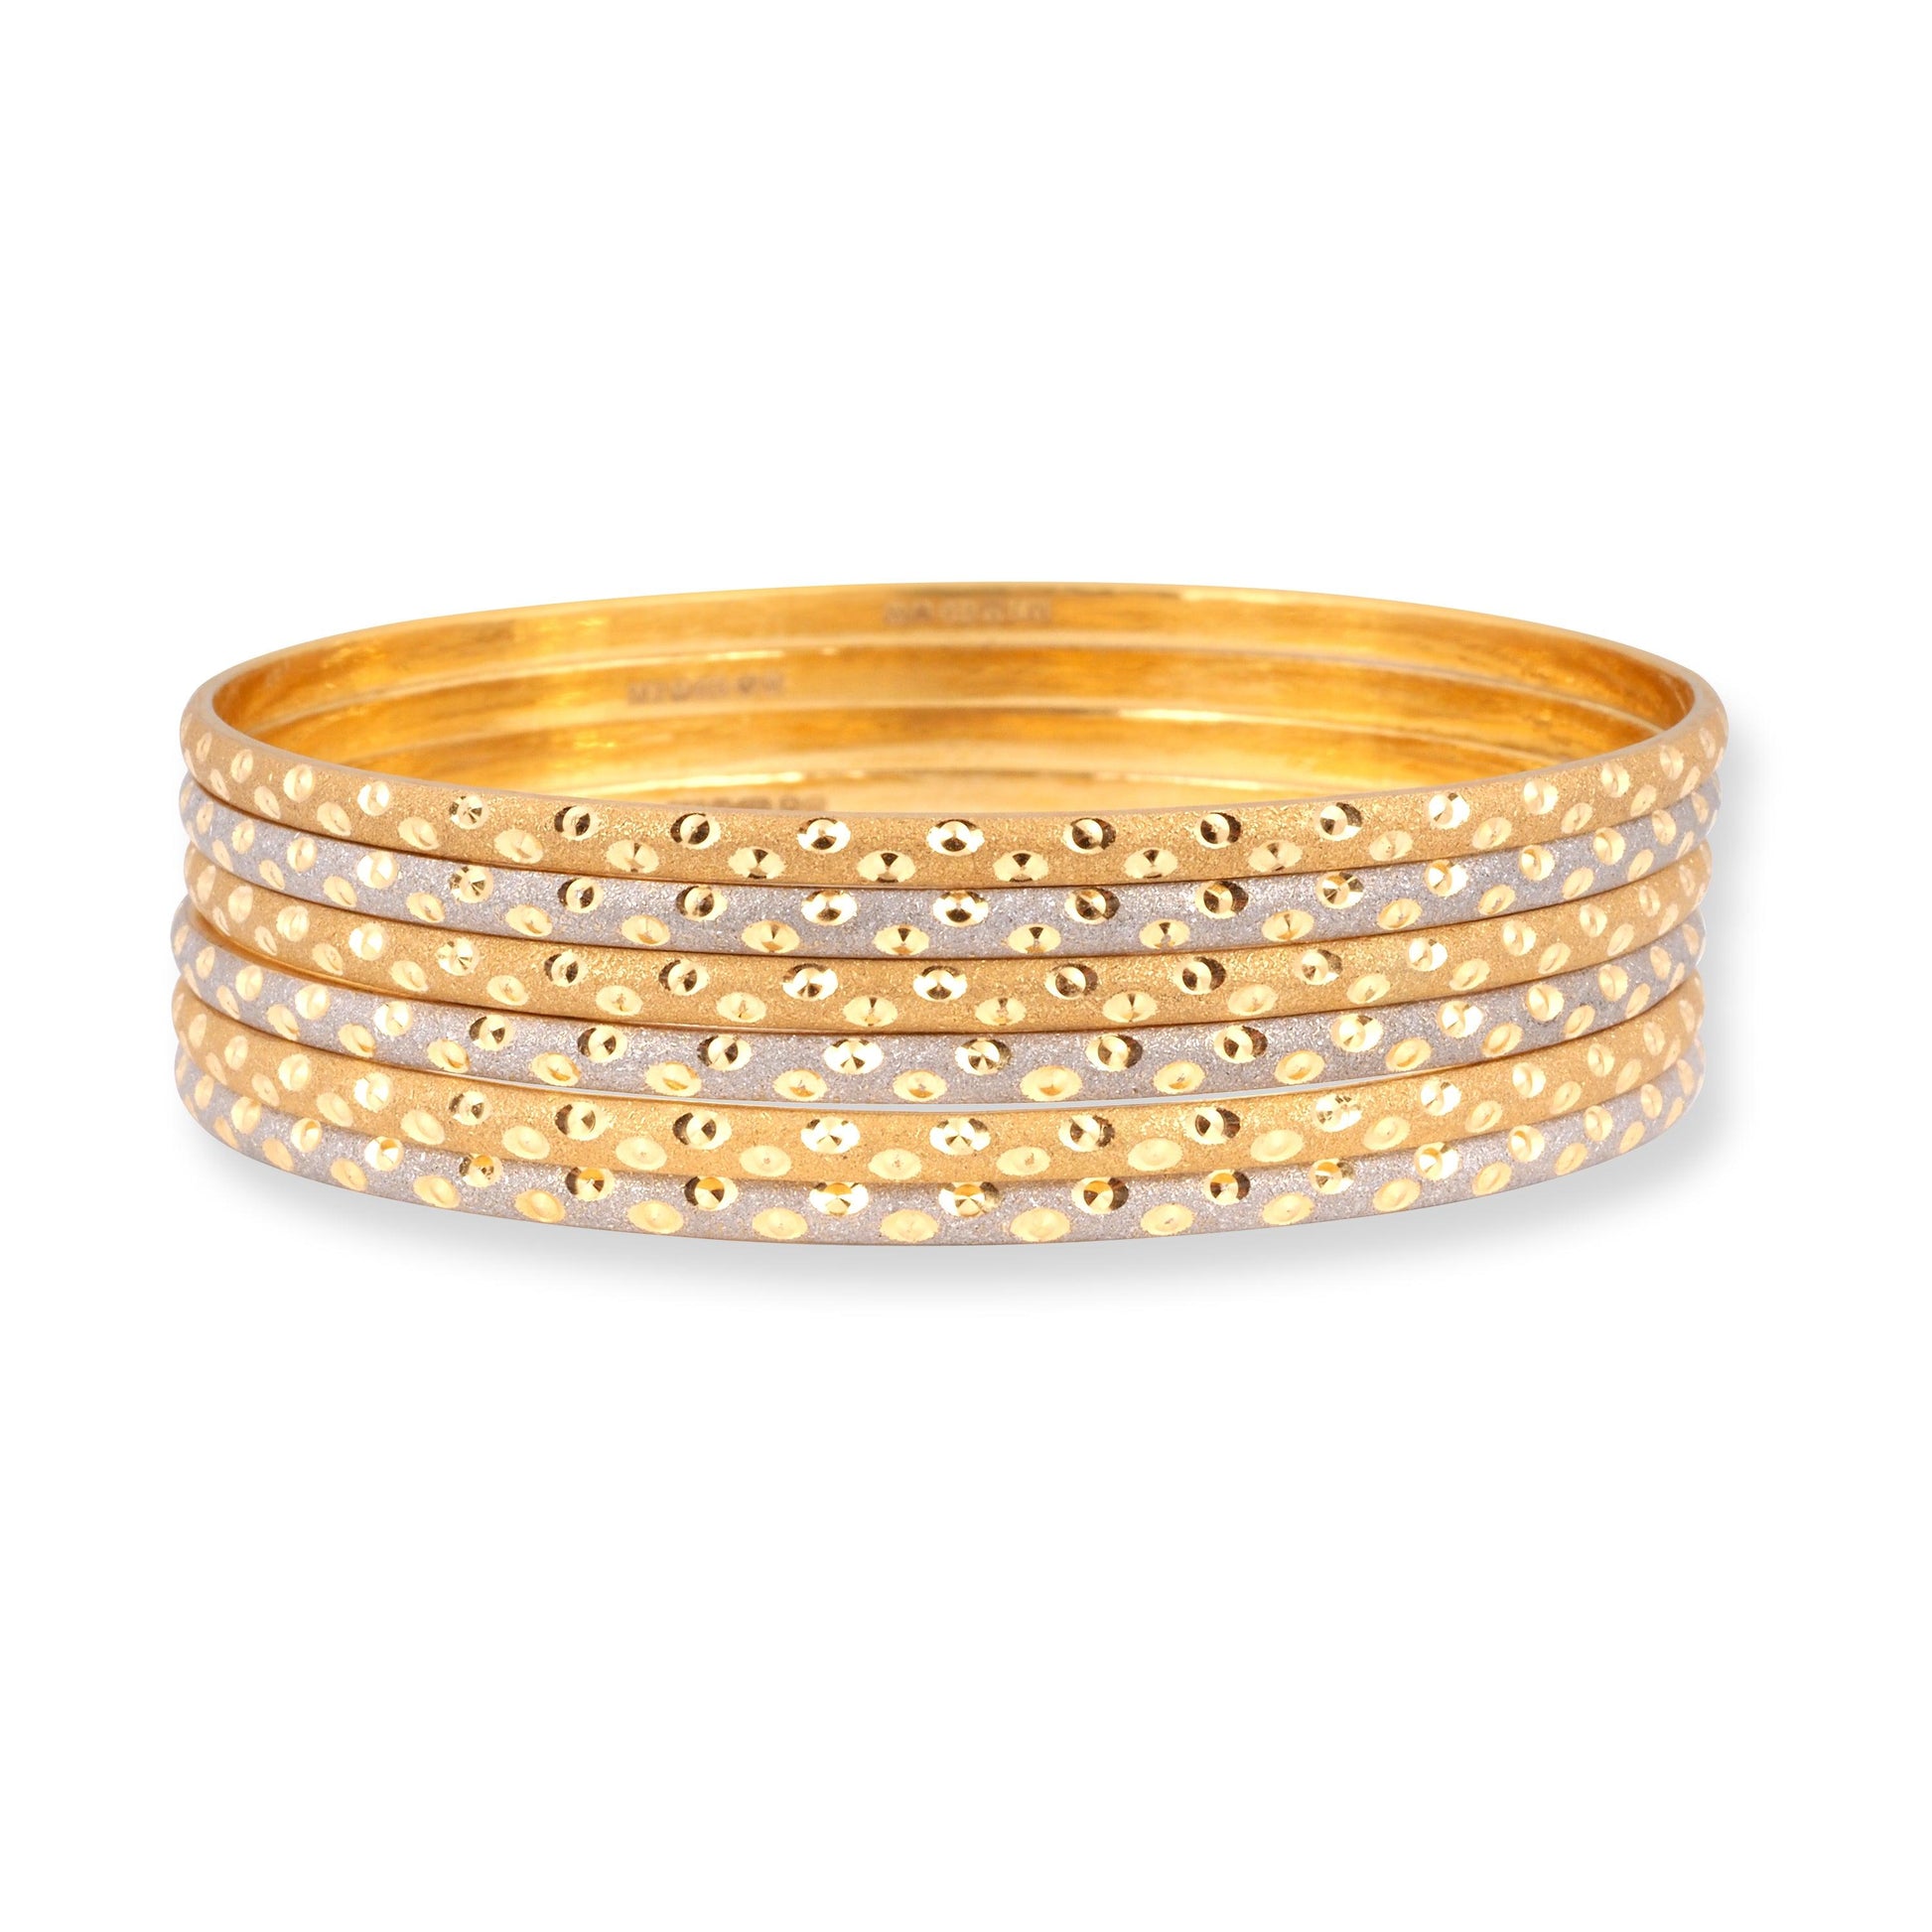 Set of Six 22ct Gold Bangles with Matt Brushed Finish and Diamond Cut Beads B-8567 - Minar Jewellers